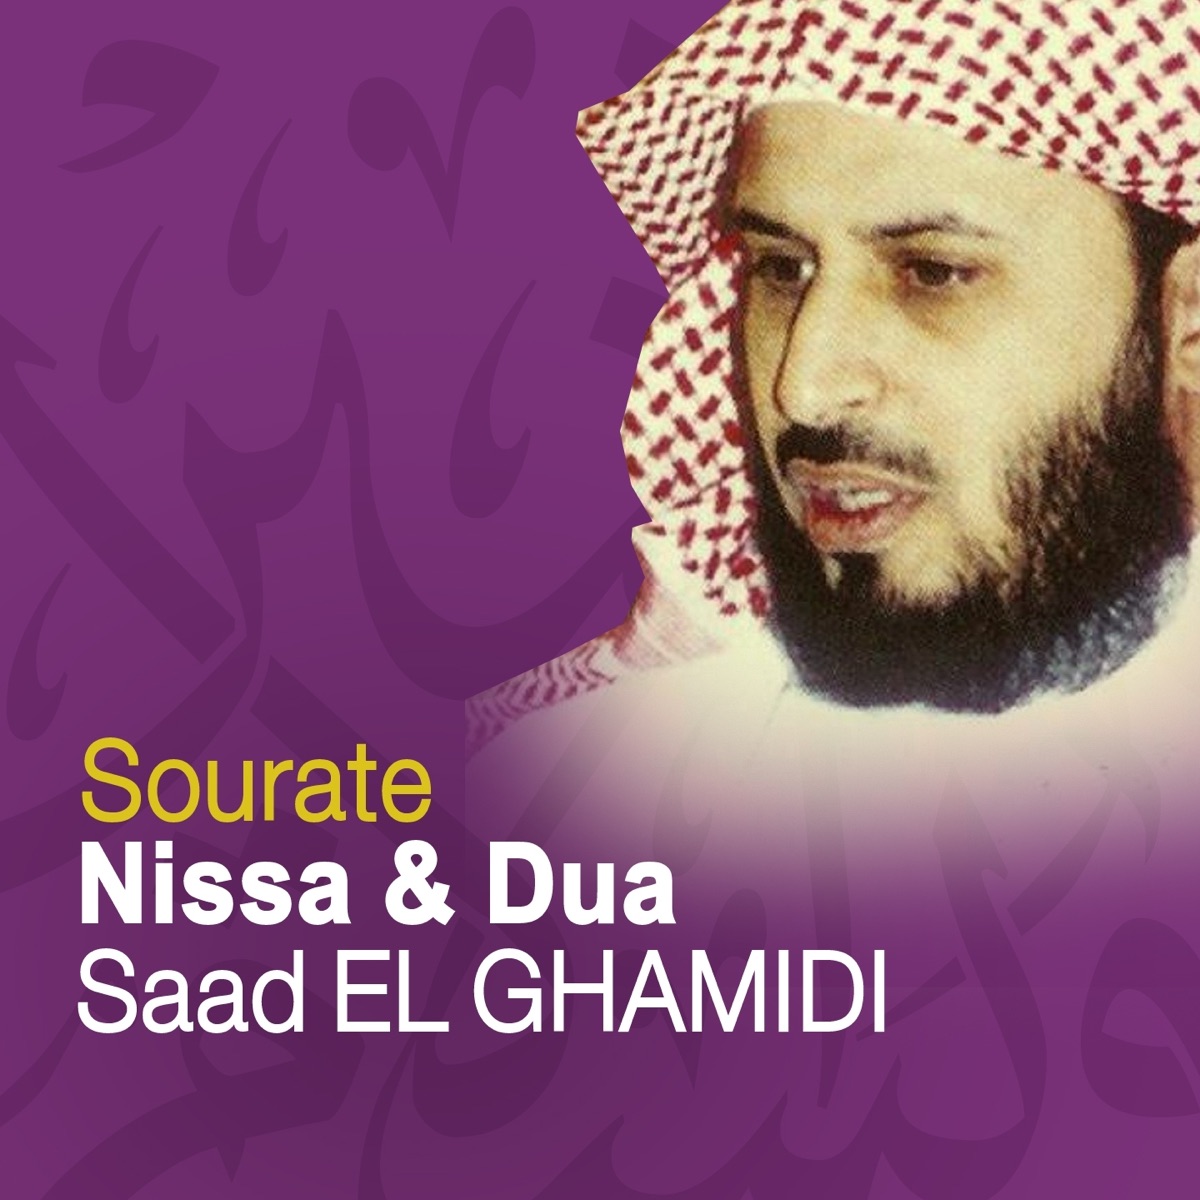 Sourate Nissa & Dua (Quran) [Coran] - Album by Saad El Ghamidi - Apple Music